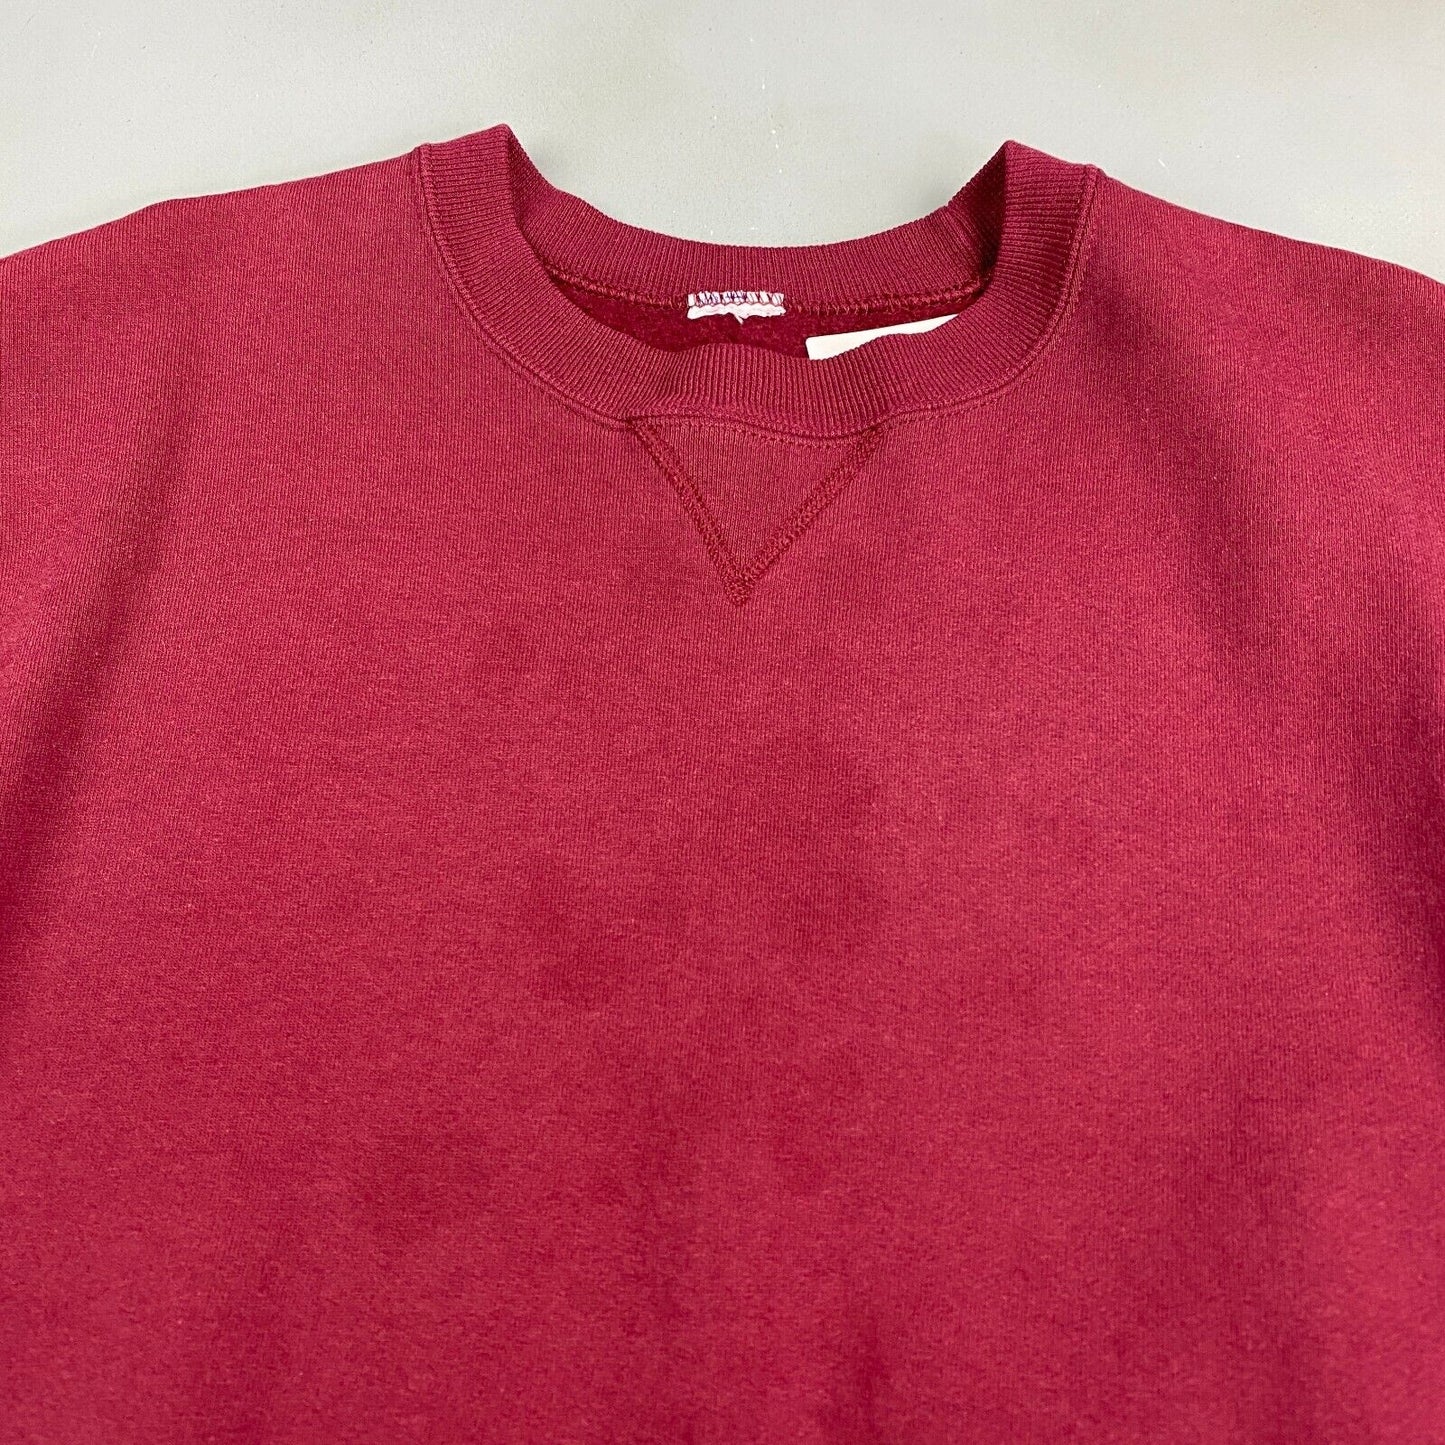 VINTAGE Blank Red Russell Athletic Crewneck Sweater sz Medium Mens Adult